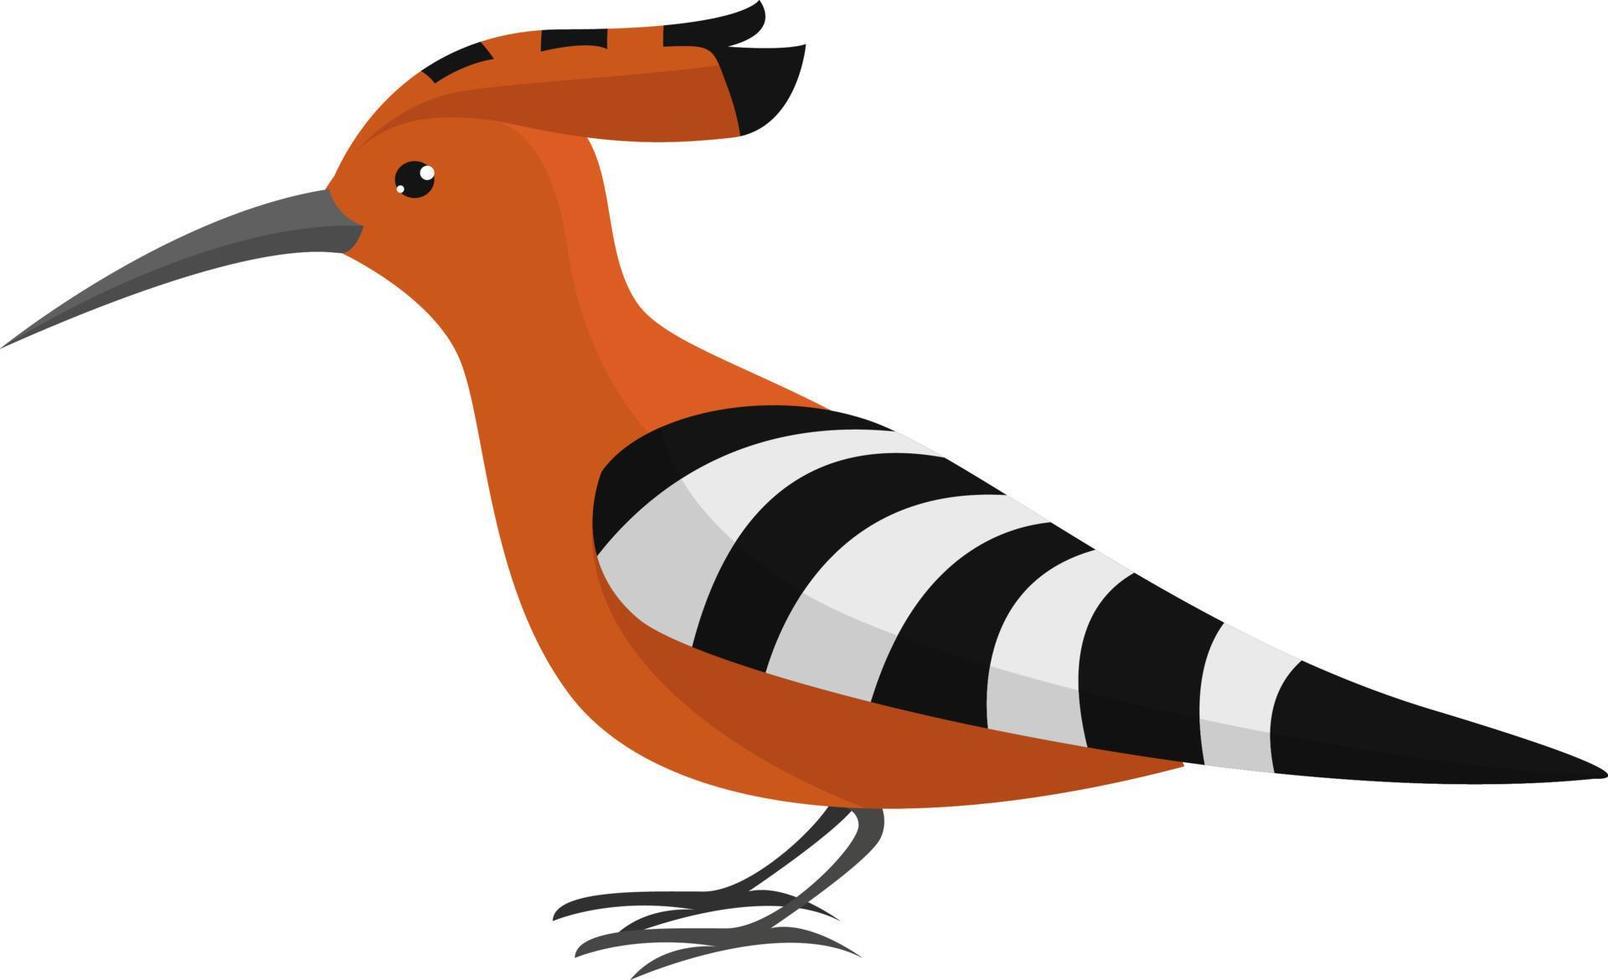 Hoopoe bird, illustration, vector on white background